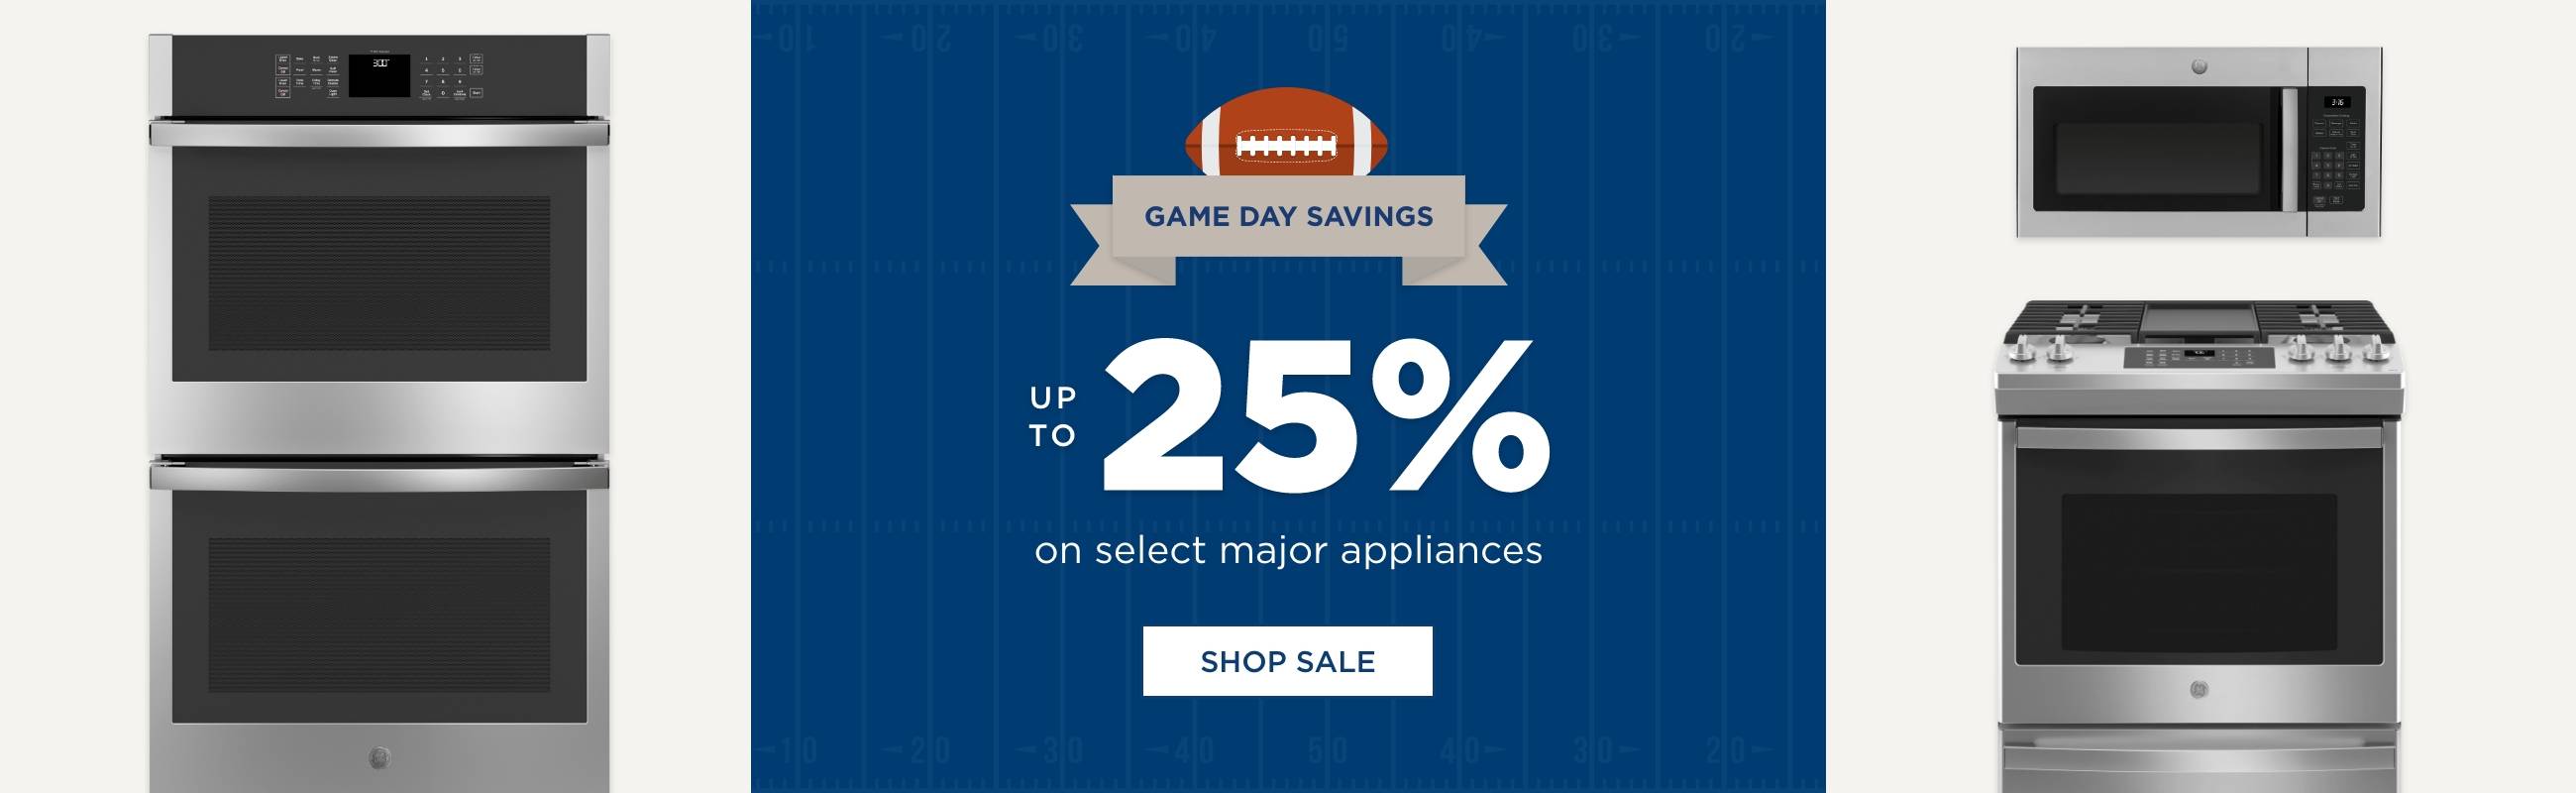 Game Day Savings - up to 25% on select major appliances